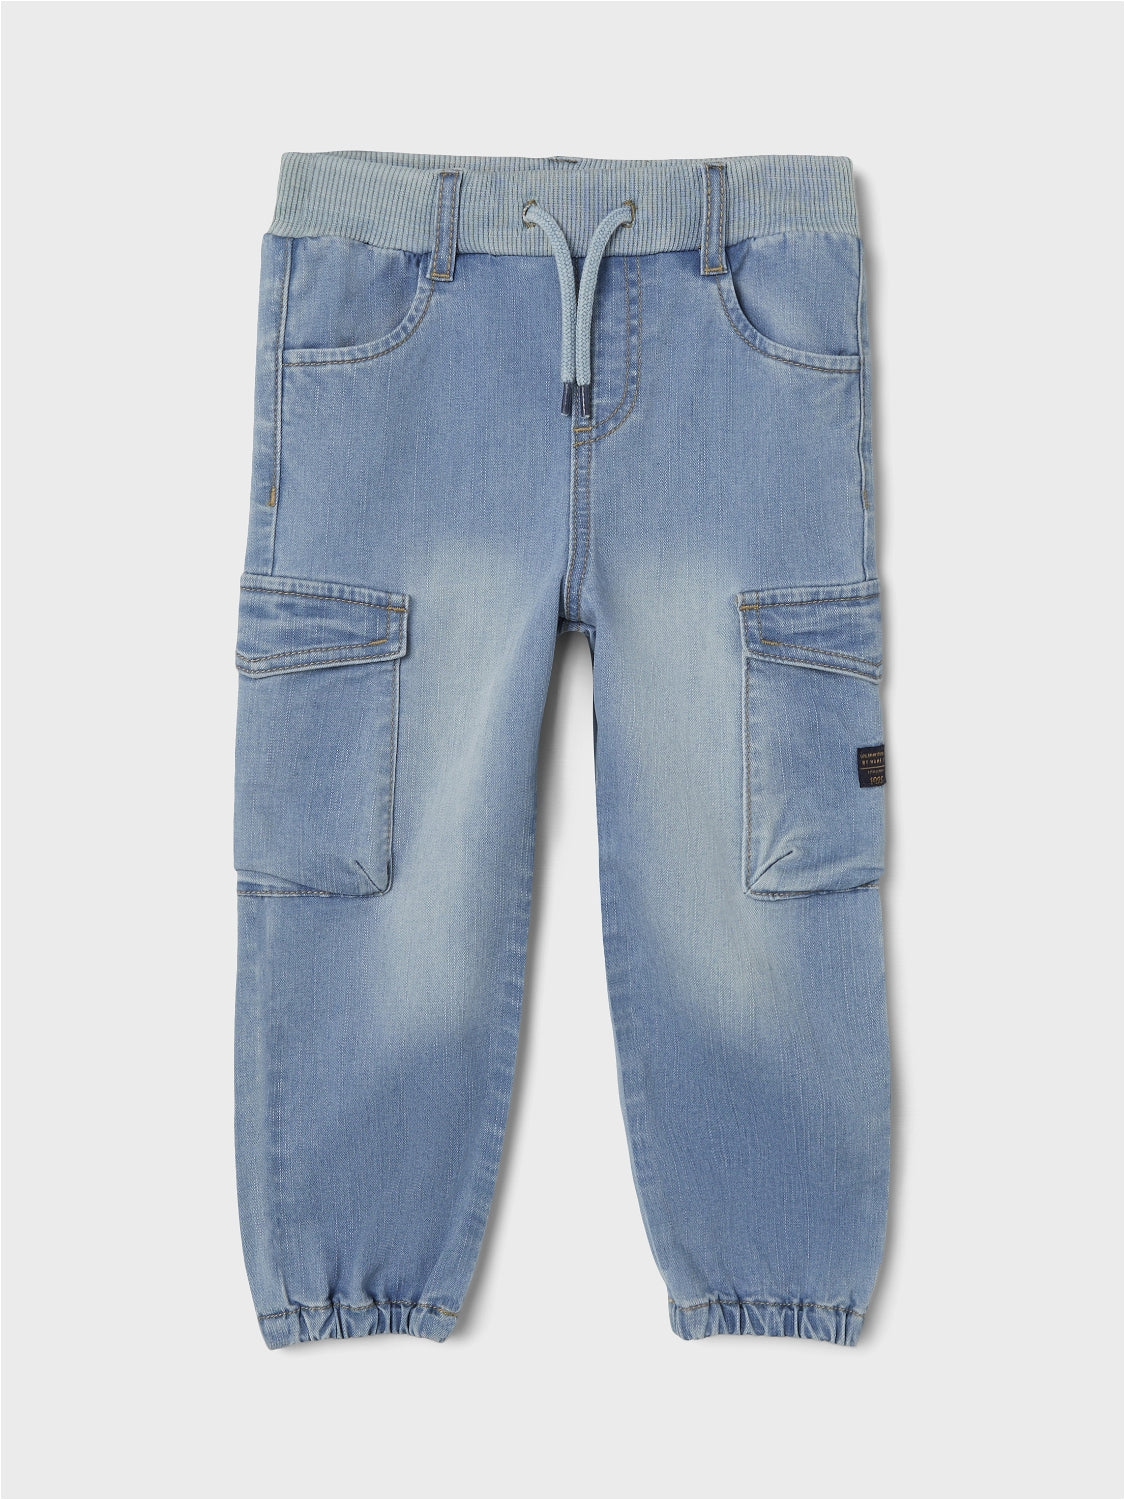 Mjukisjeans - jeans Baggy Fit